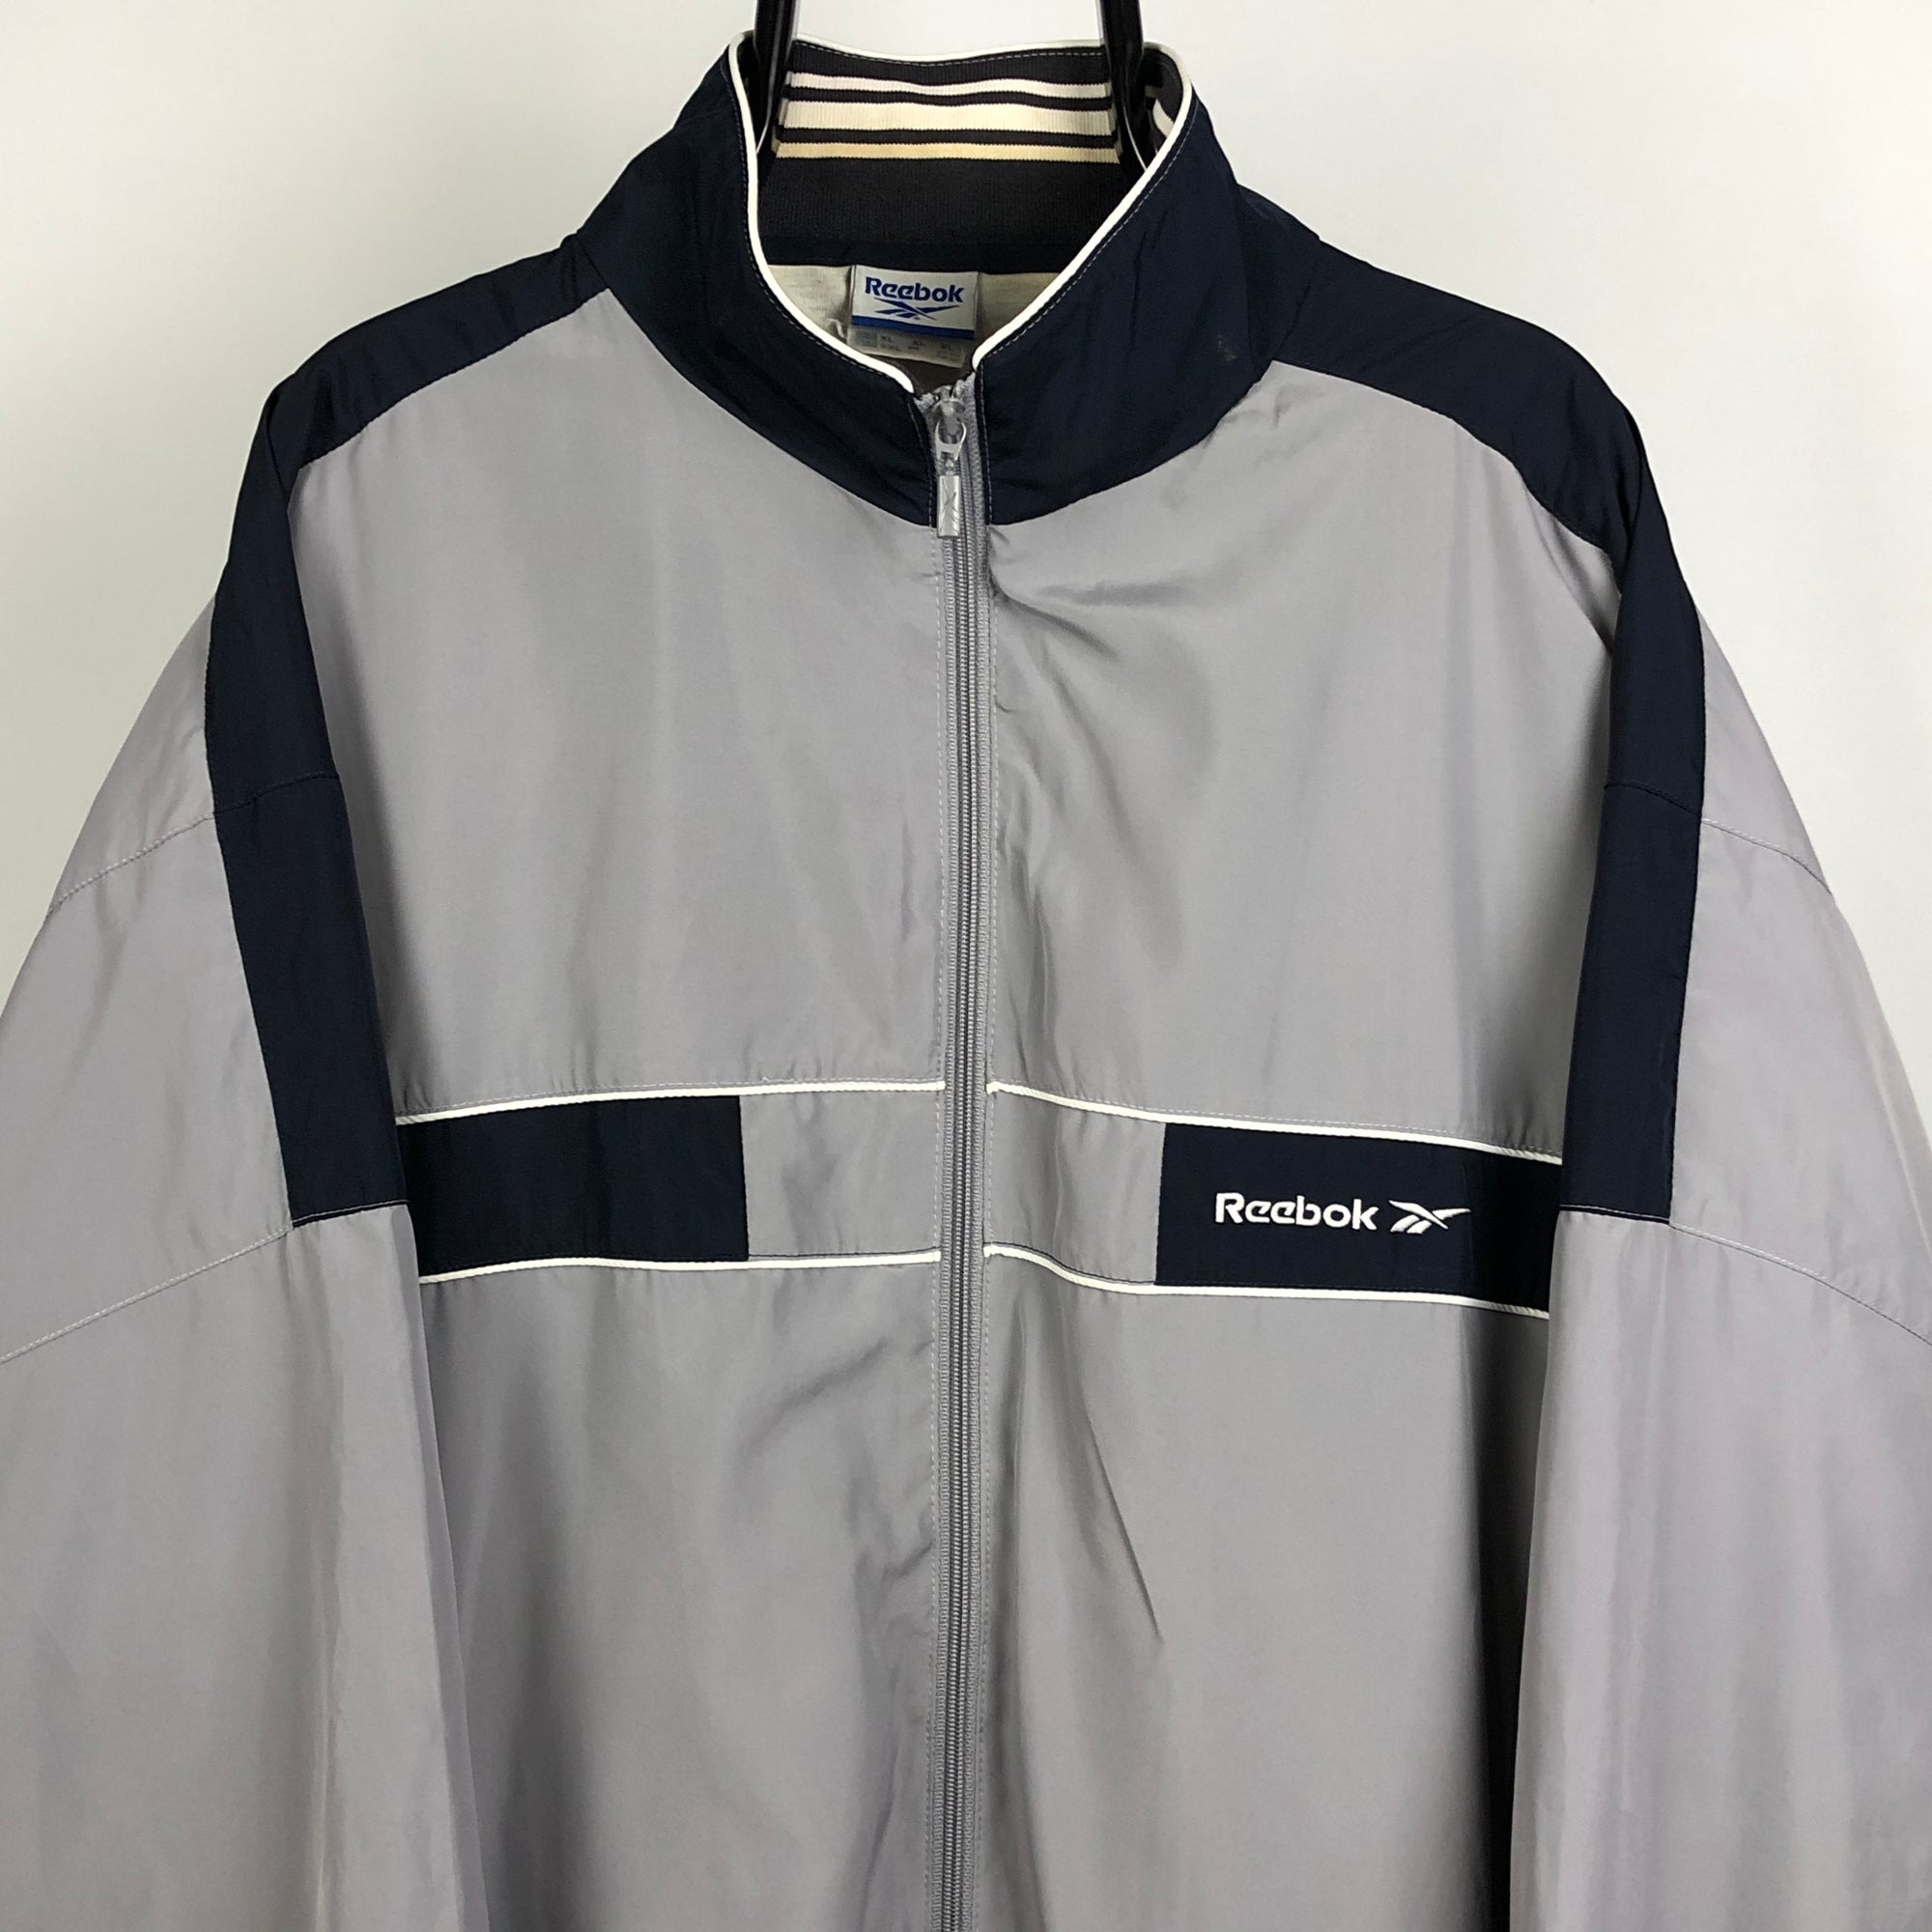 Vintage Reebok Track Jacket in Grey/Navy - Men's XL/Women's XXL